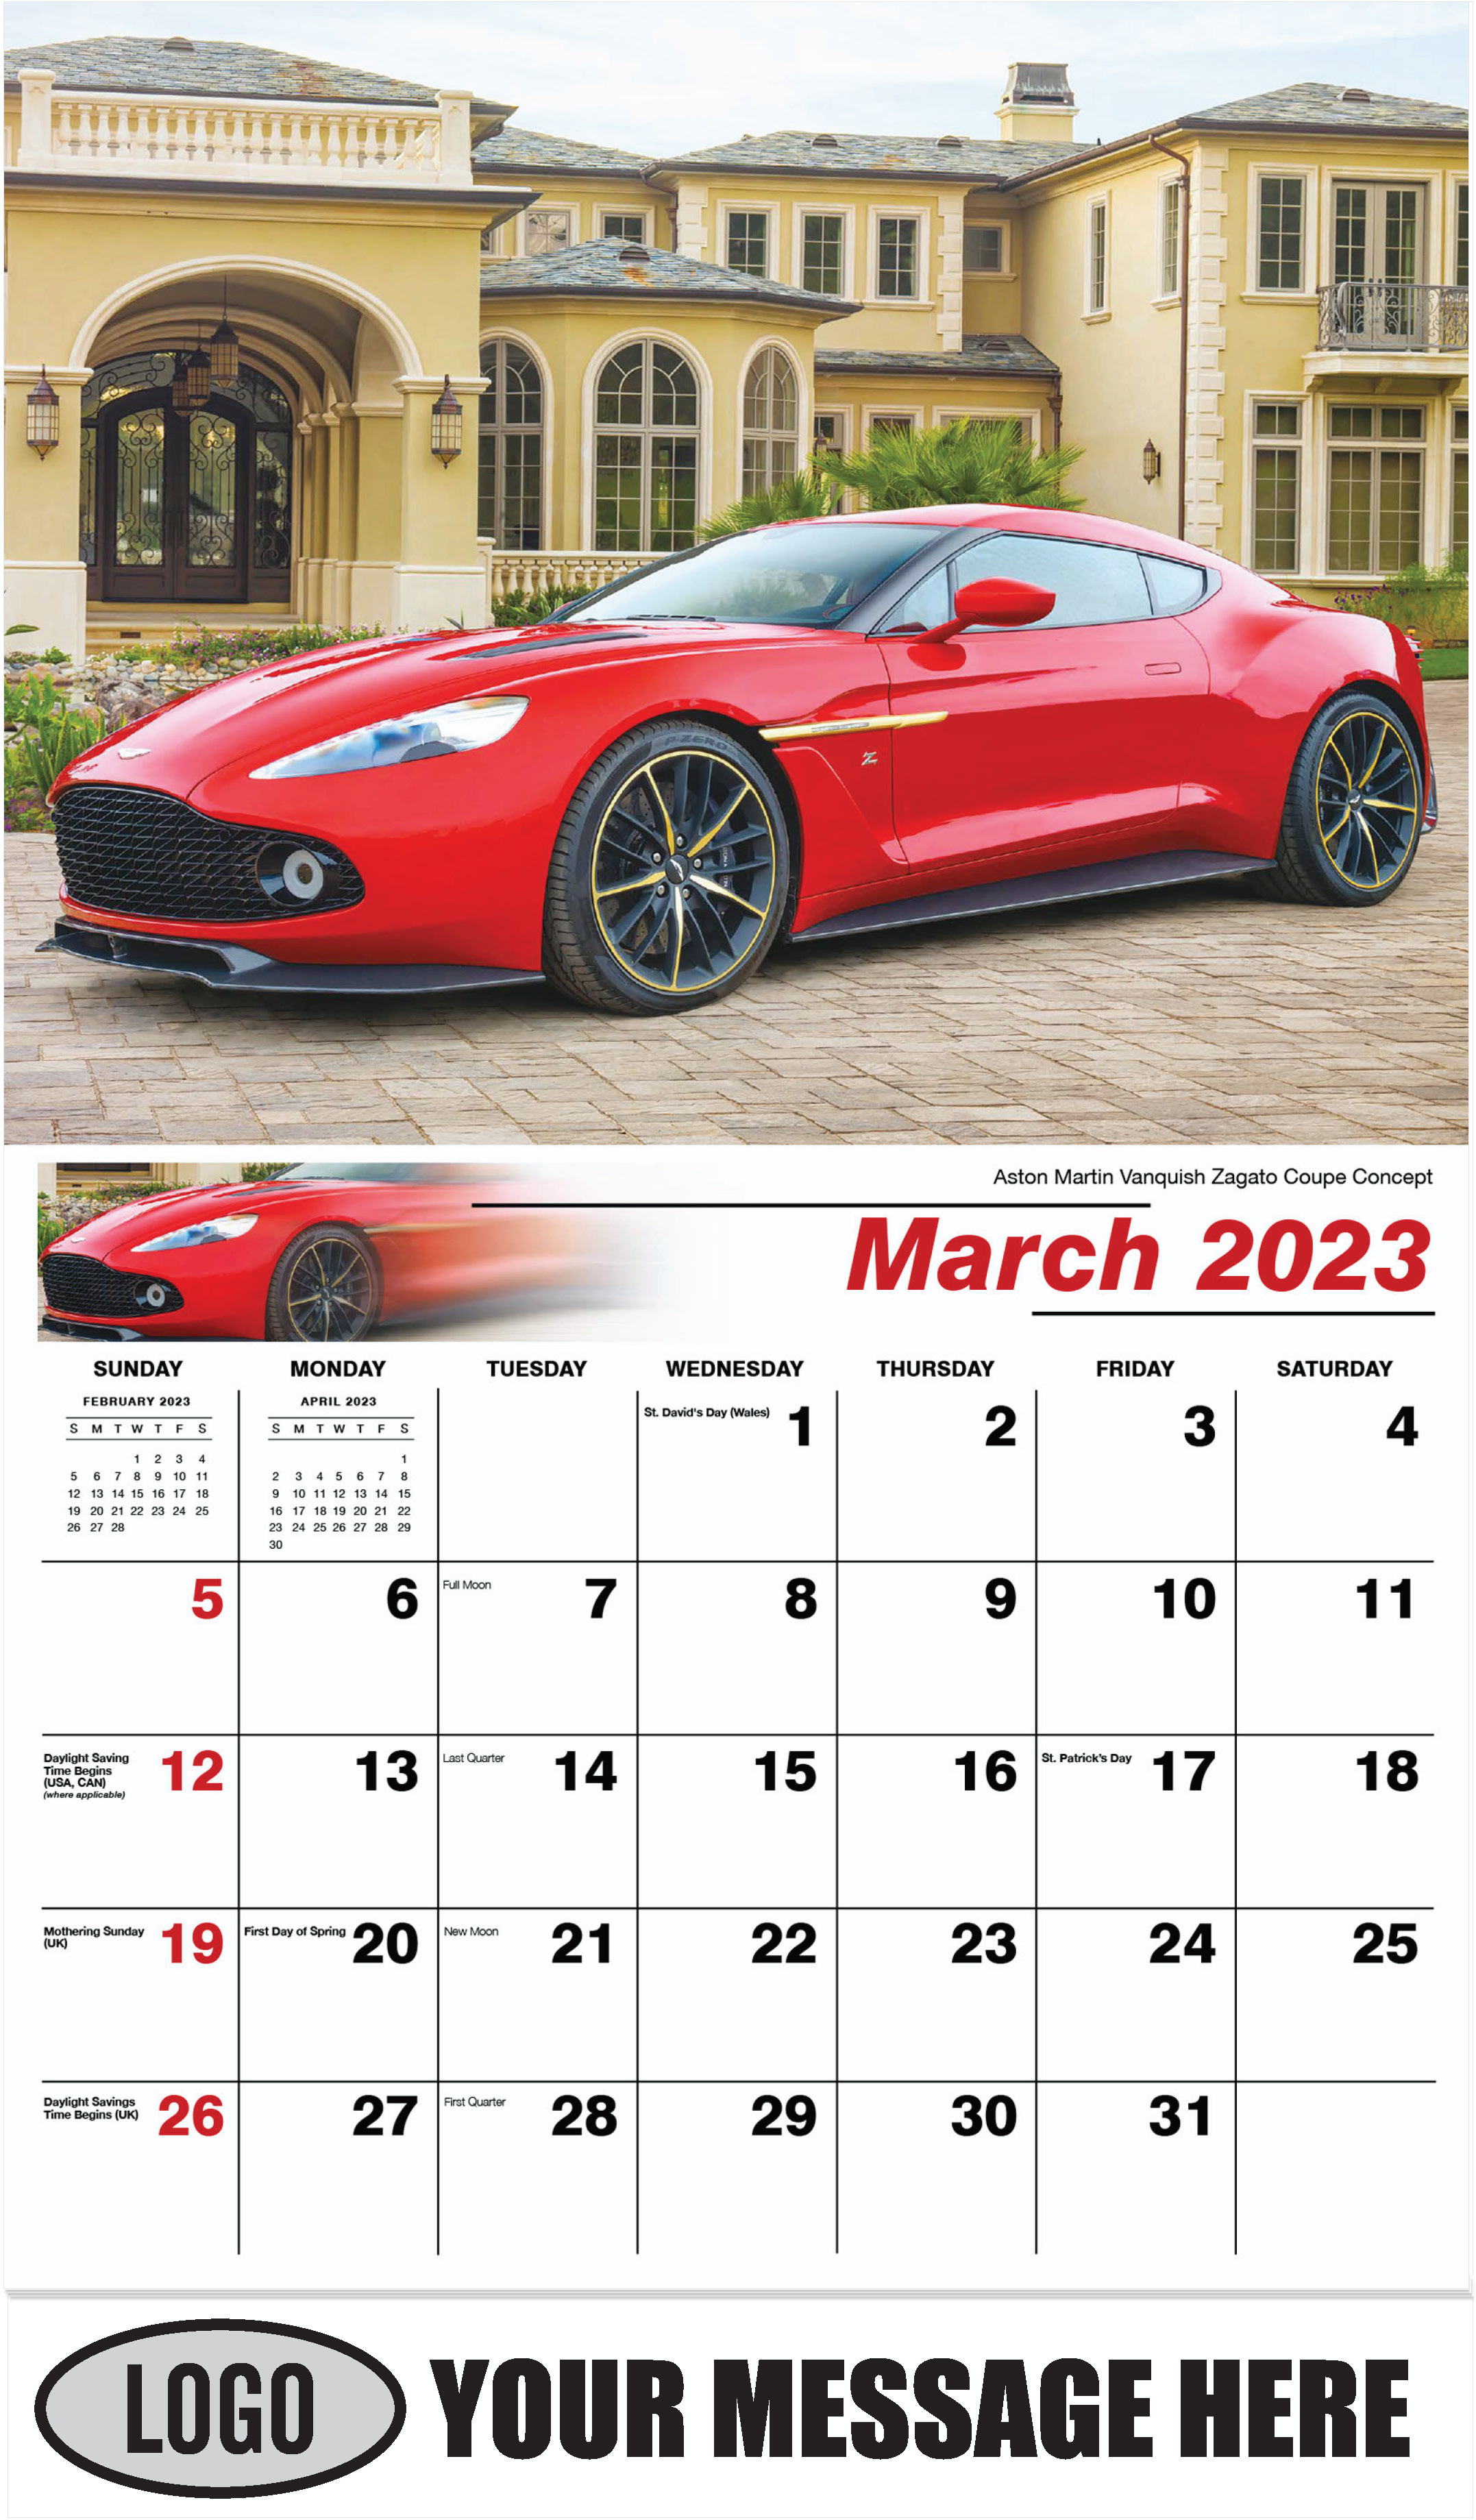 Aston Martin Vanquish Zagato Coupe Concept - March - Exotic Cars 2023 Promotional Calendar